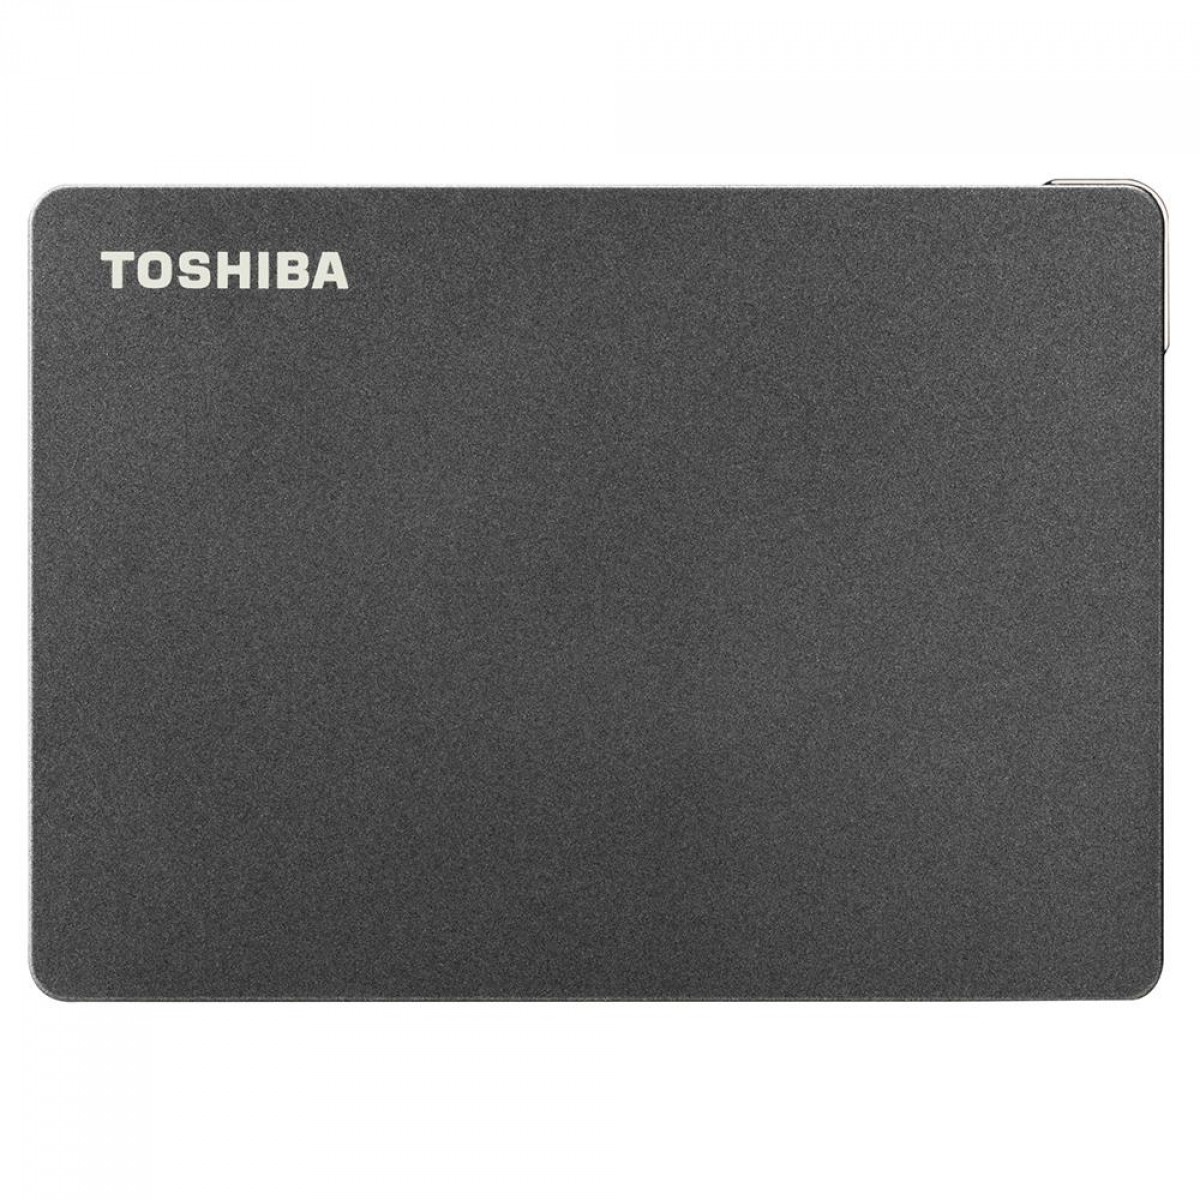 HD Externo Toshiba Canvio Gaming 2TB, USB 3.0, Até 5Gb/s, HDTX120XK3AA